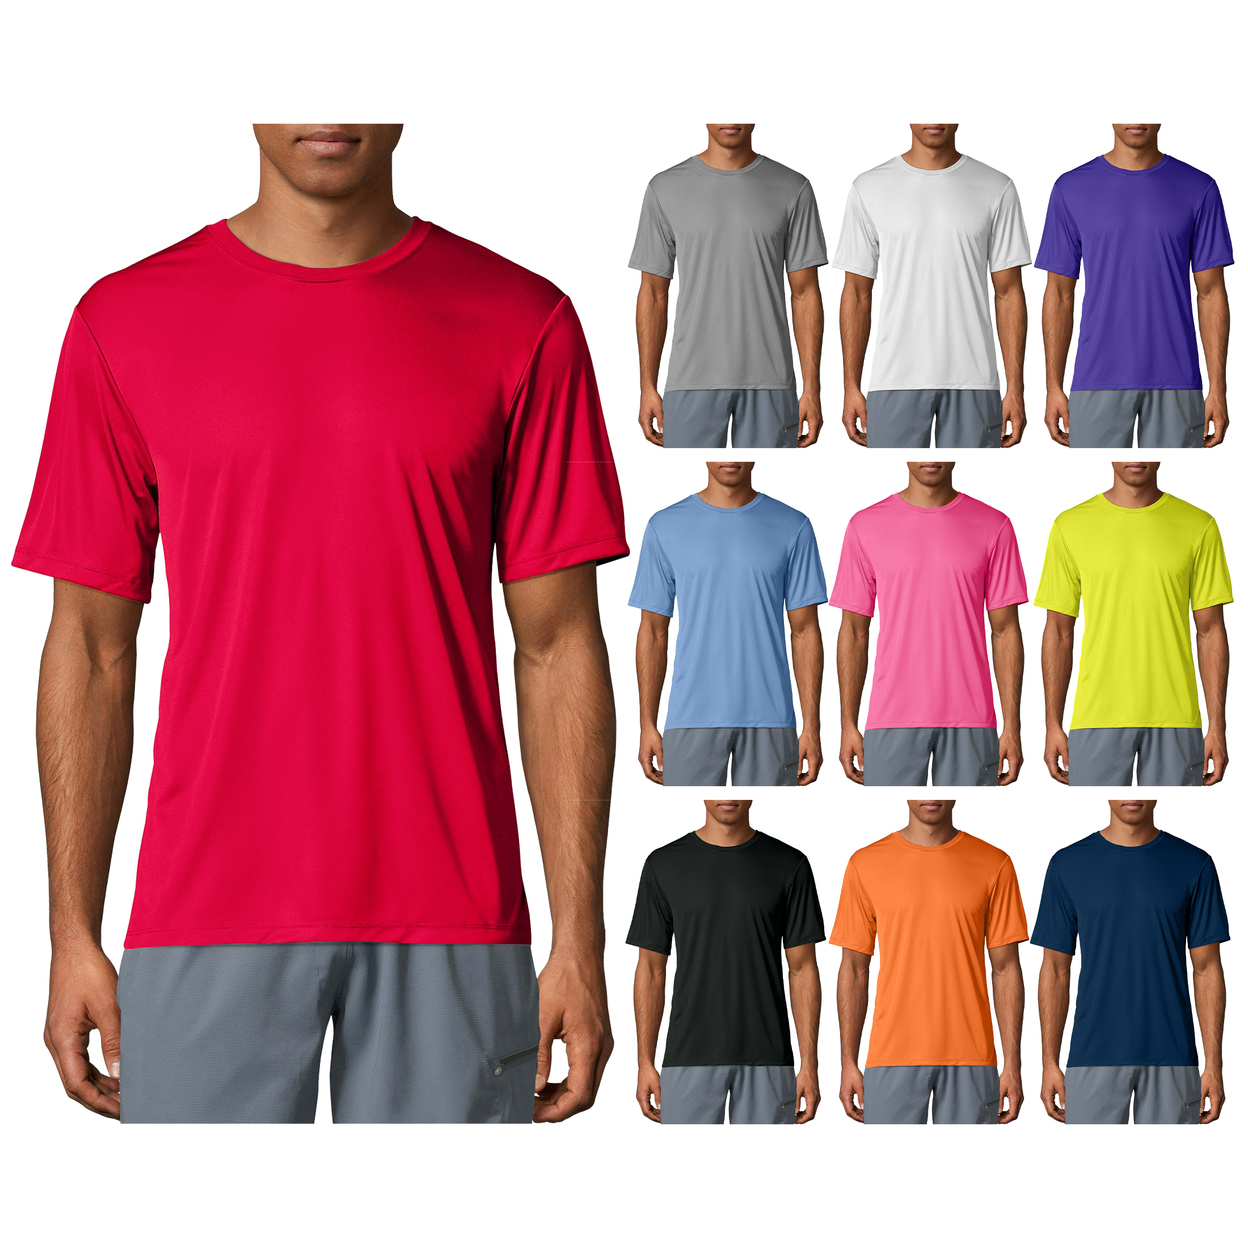 5-Pack: Men's Moisture Wicking Cool Dri-Fit Performance Short Sleeve Crew Neck T-Shirts - Medium